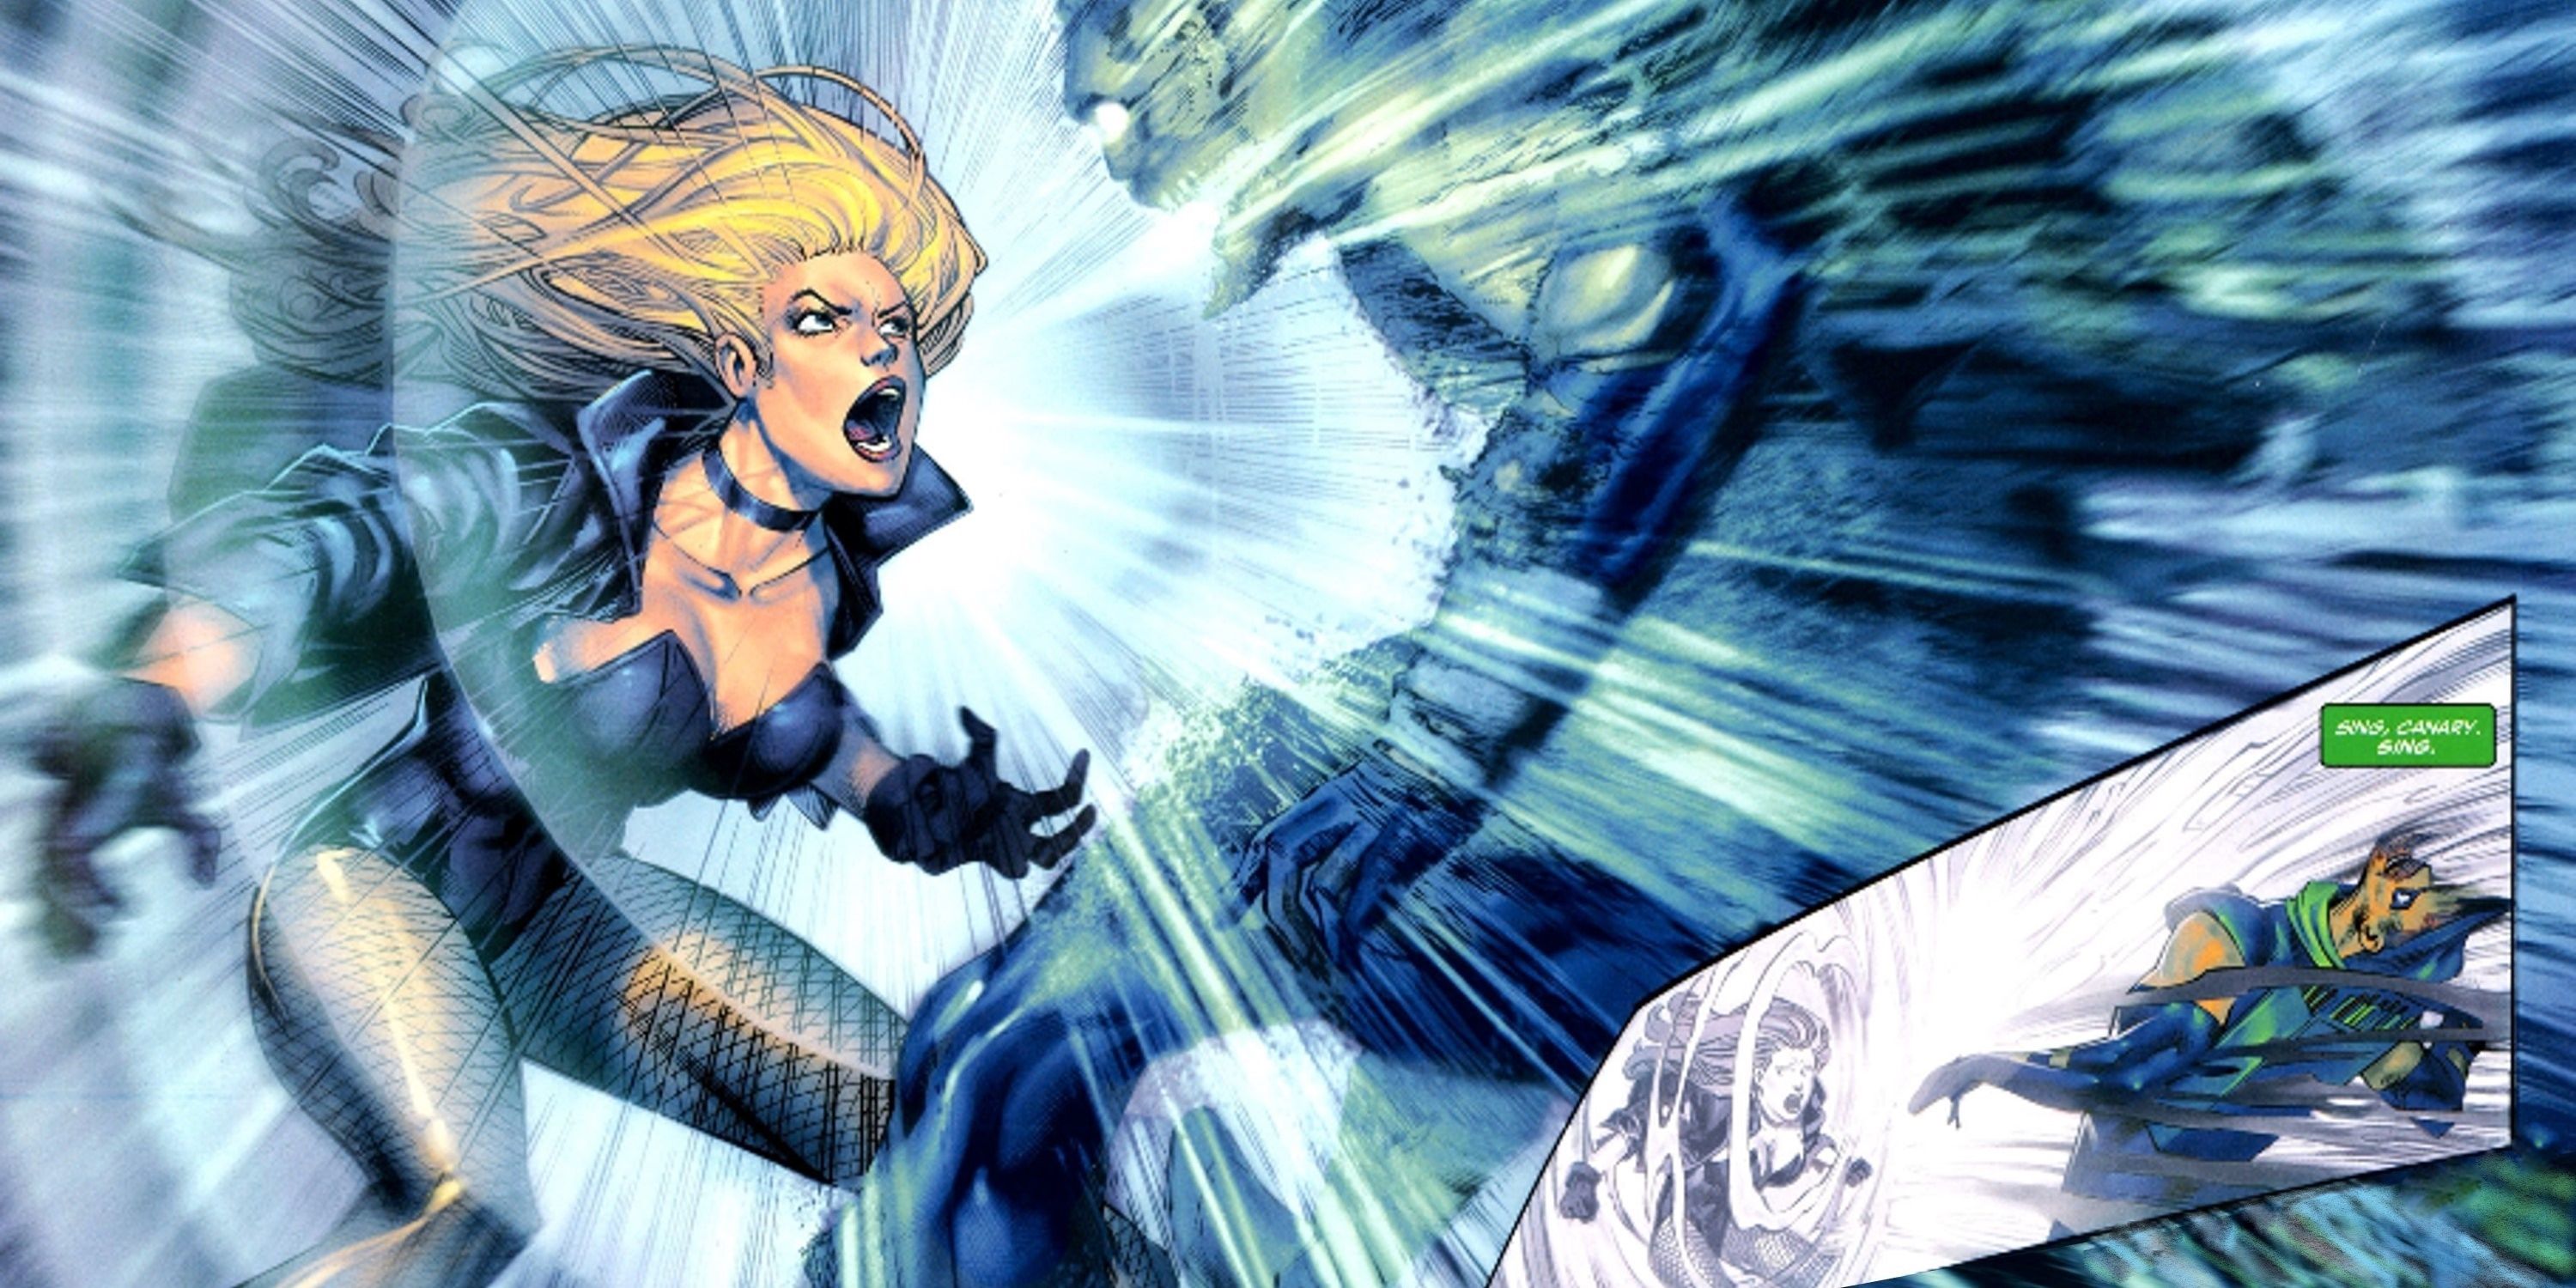 Dinah Lance AKA Black Canary using her Canary Cry DC Comics.